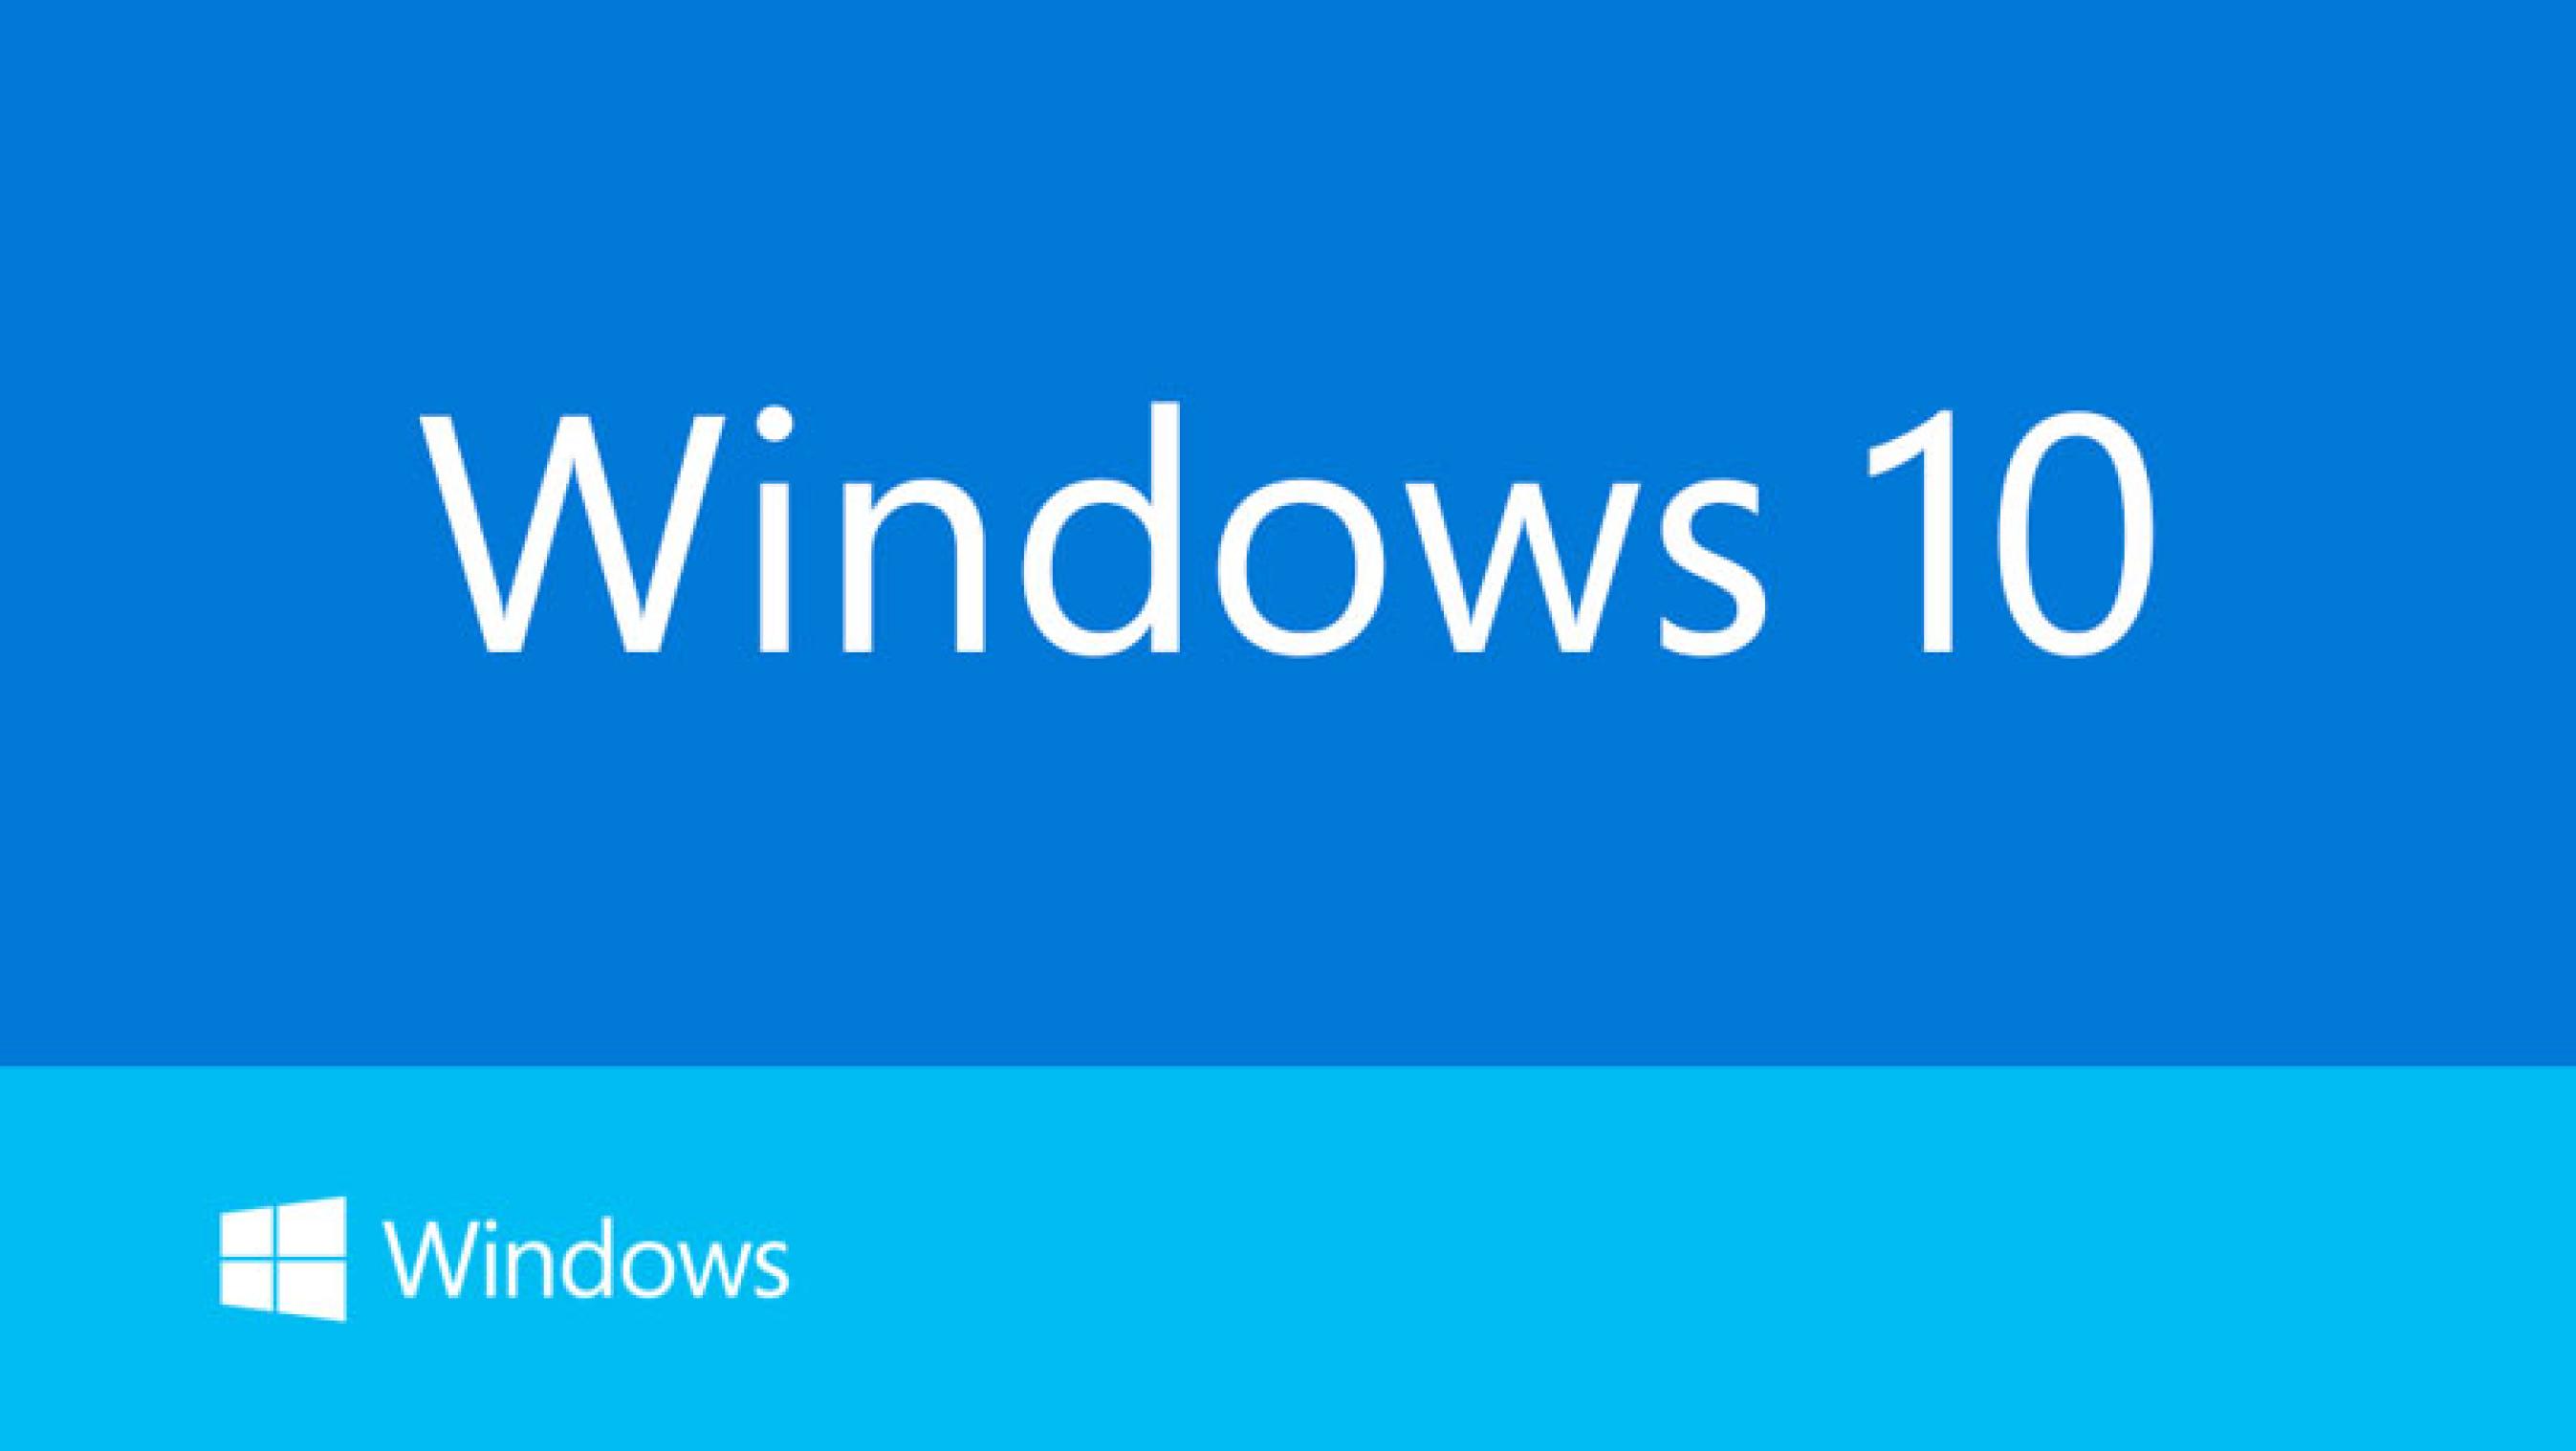 Windows 10 Desktop Wallpaper Revealed